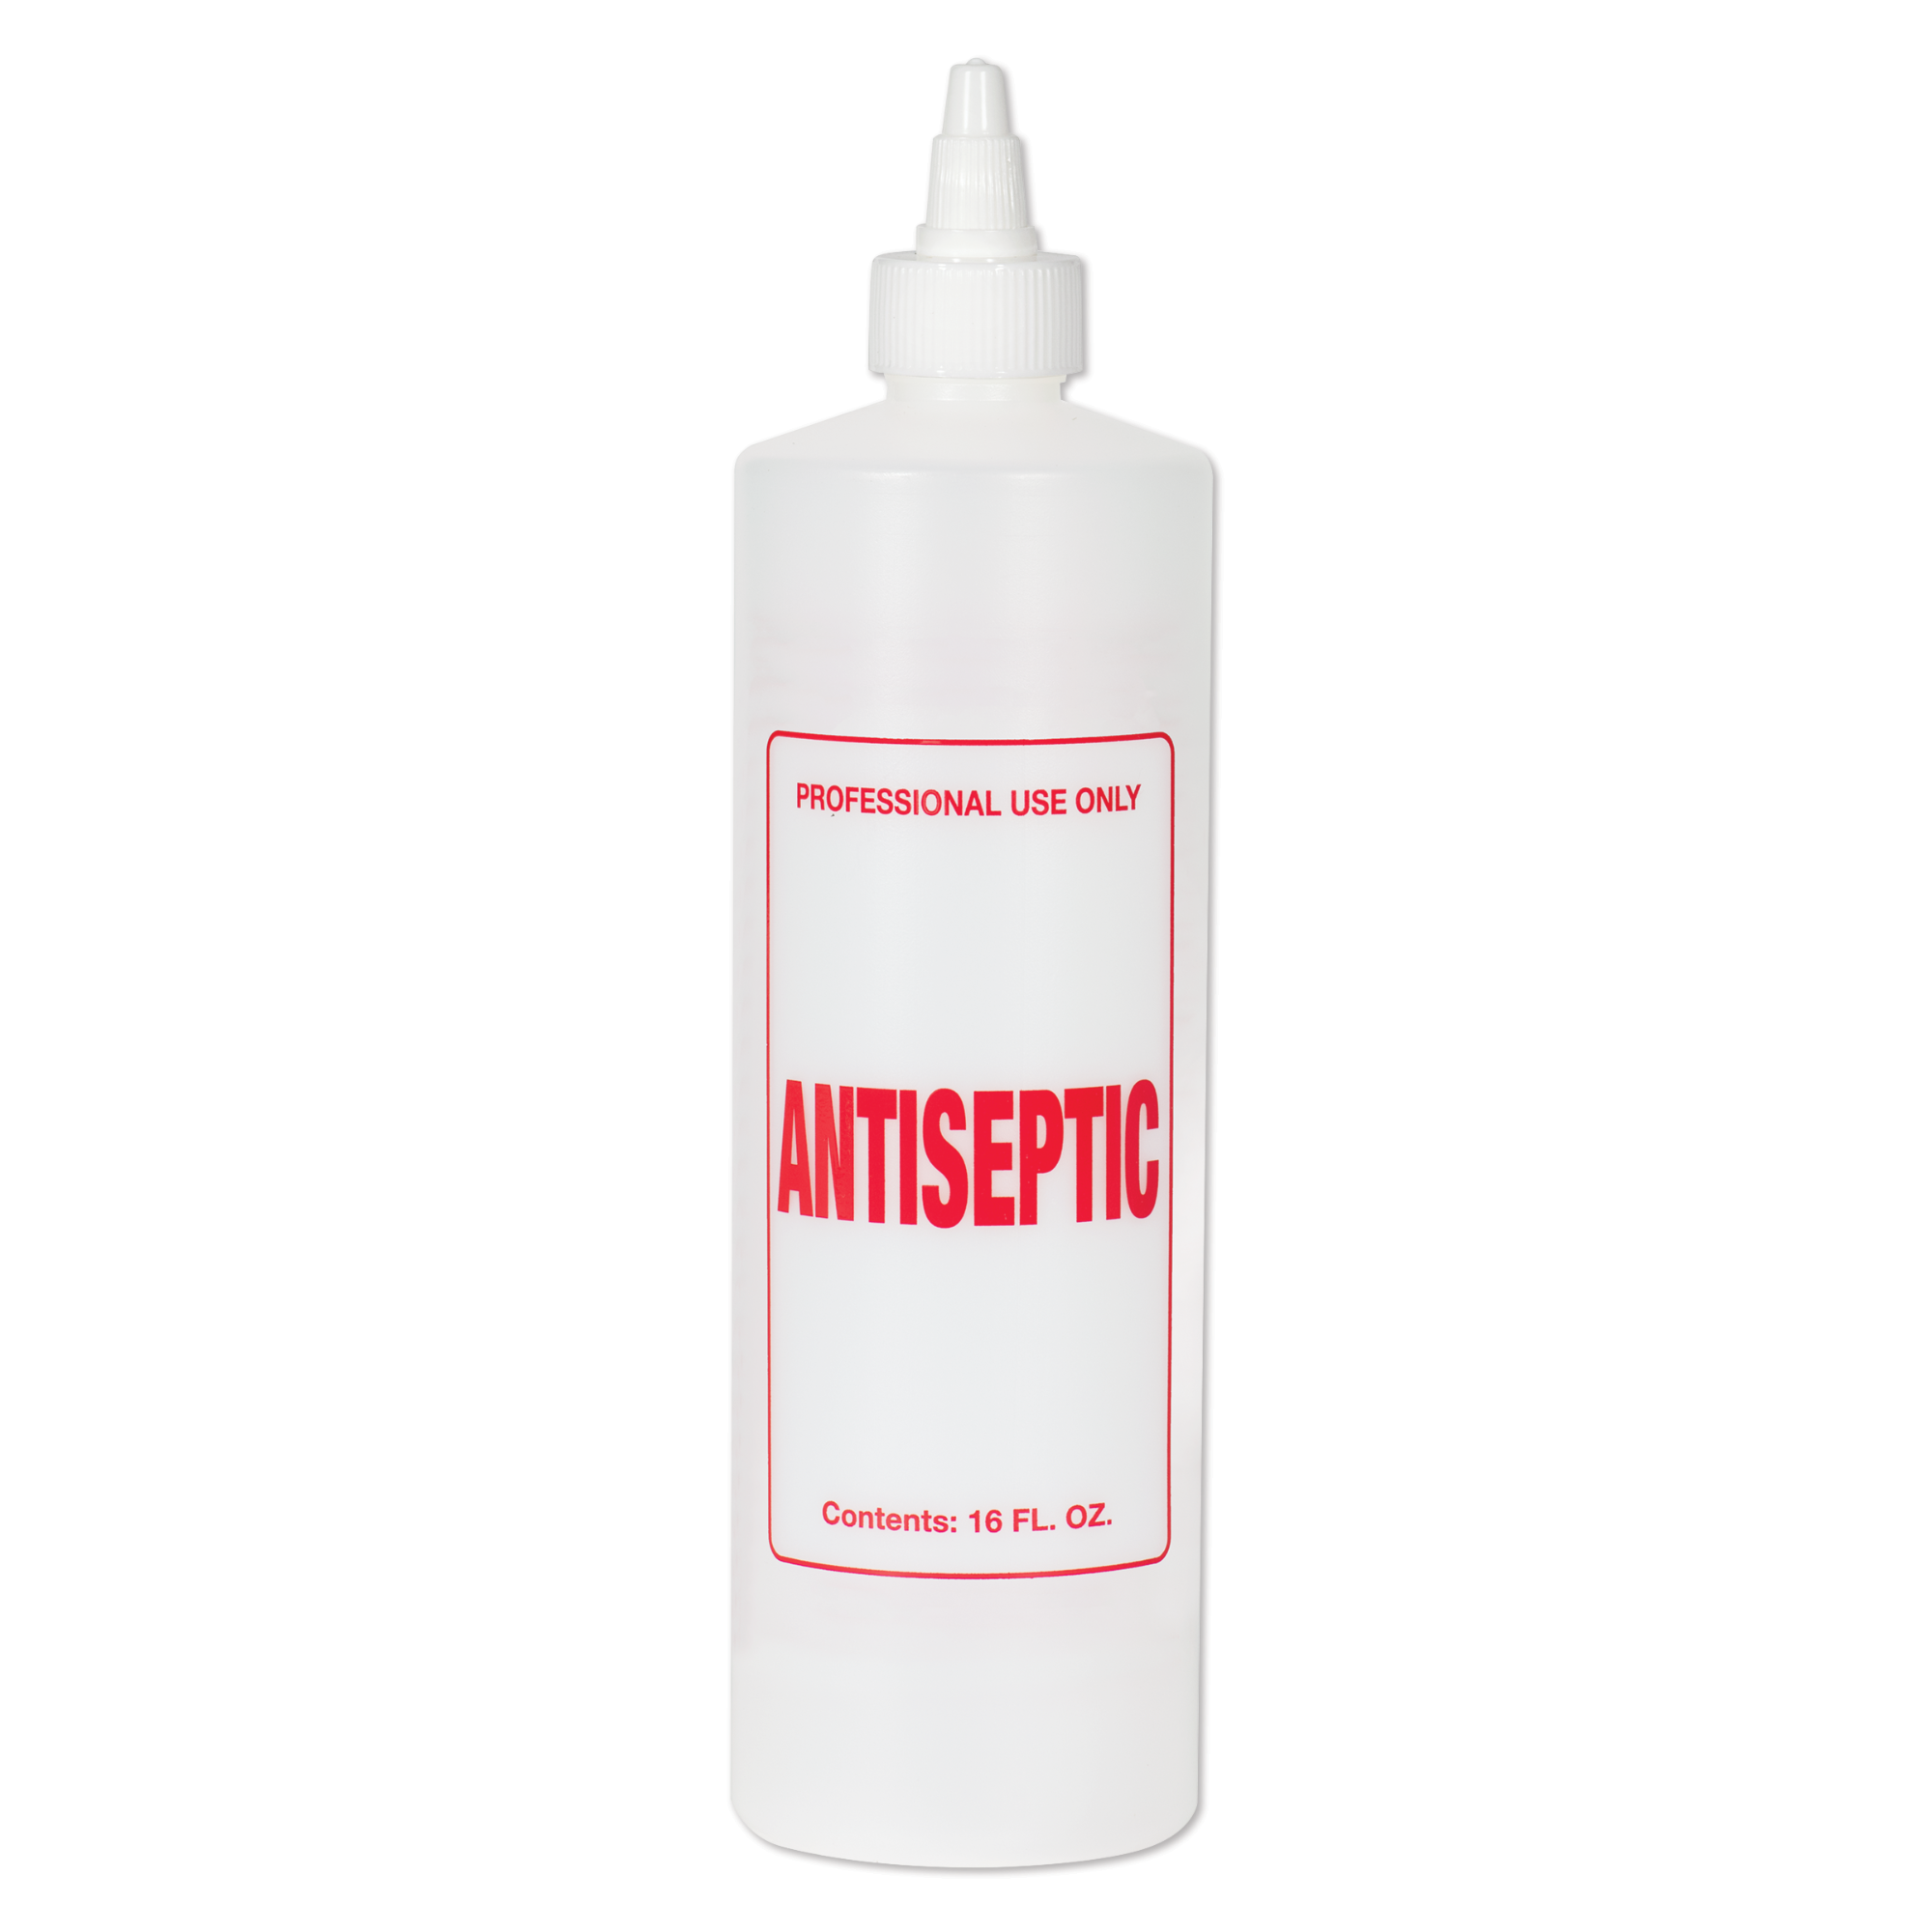 Imprinted Twist Top Bottle, Antiseptic, 16 oz.